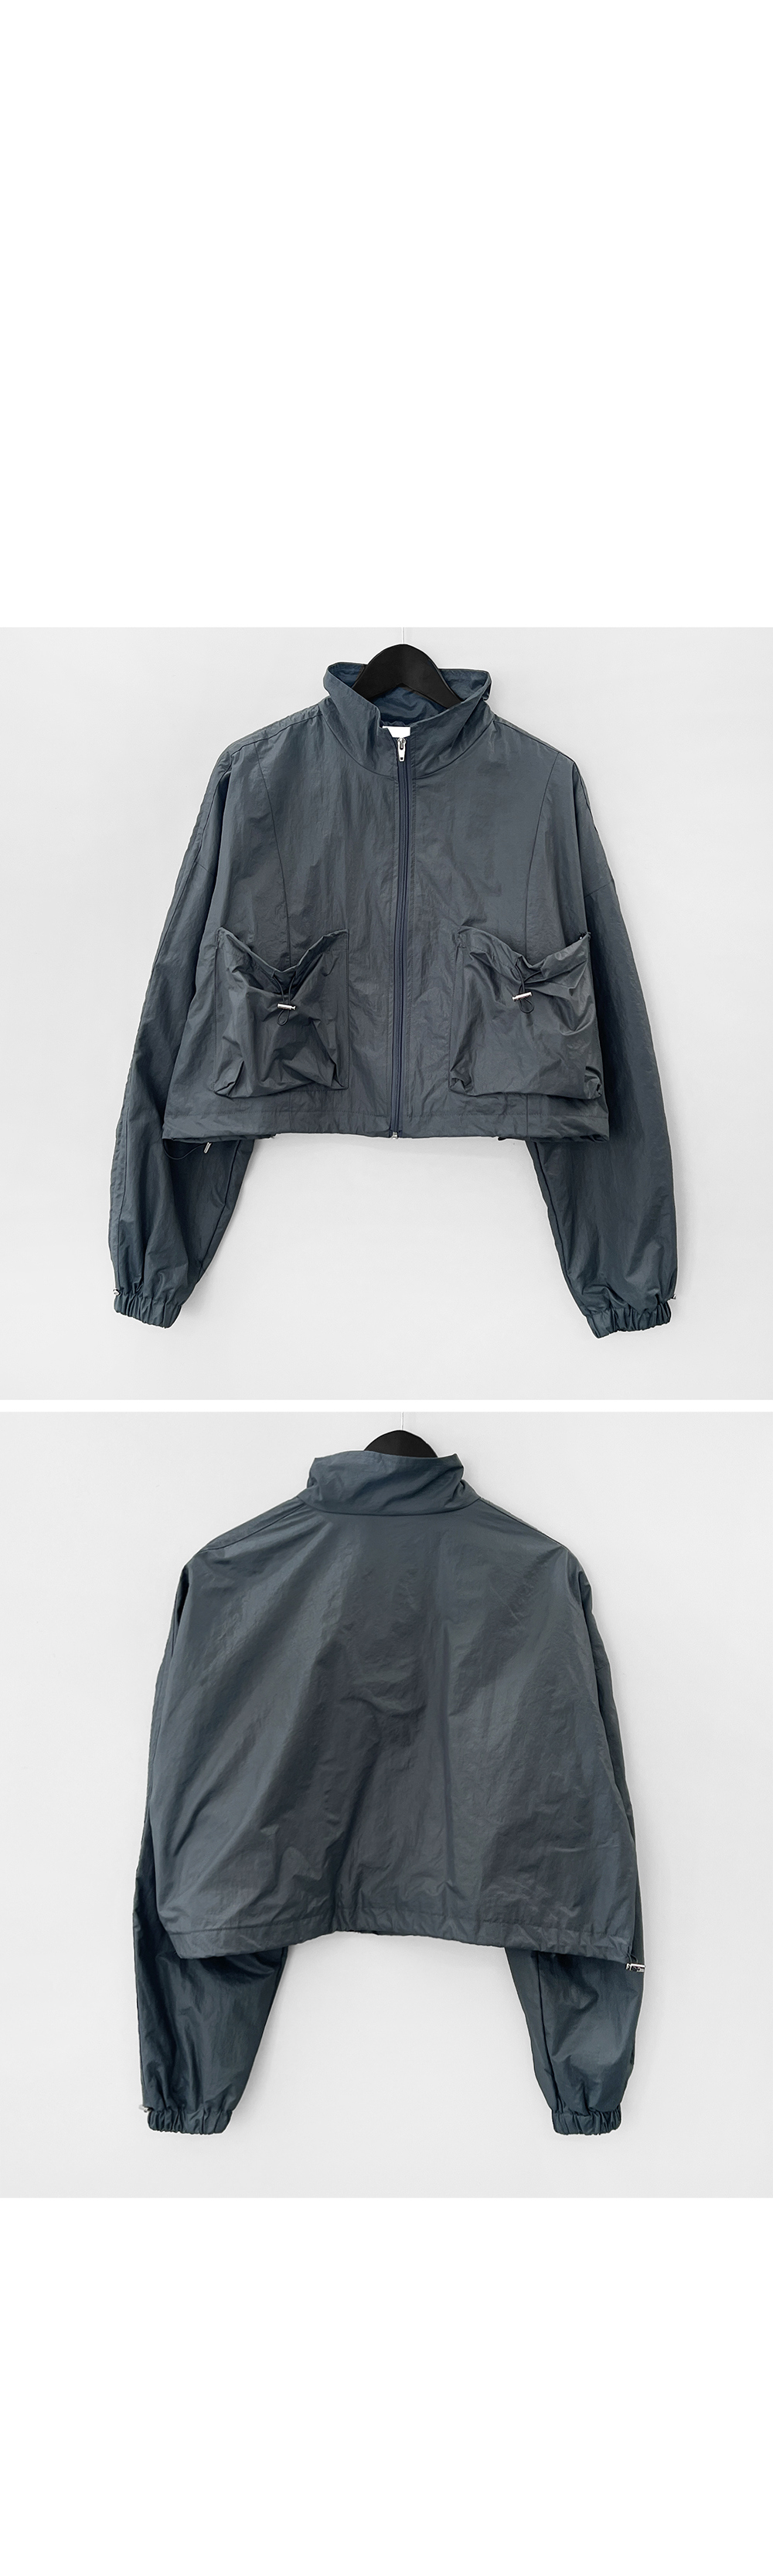 jacket charcoal color image-S1L9